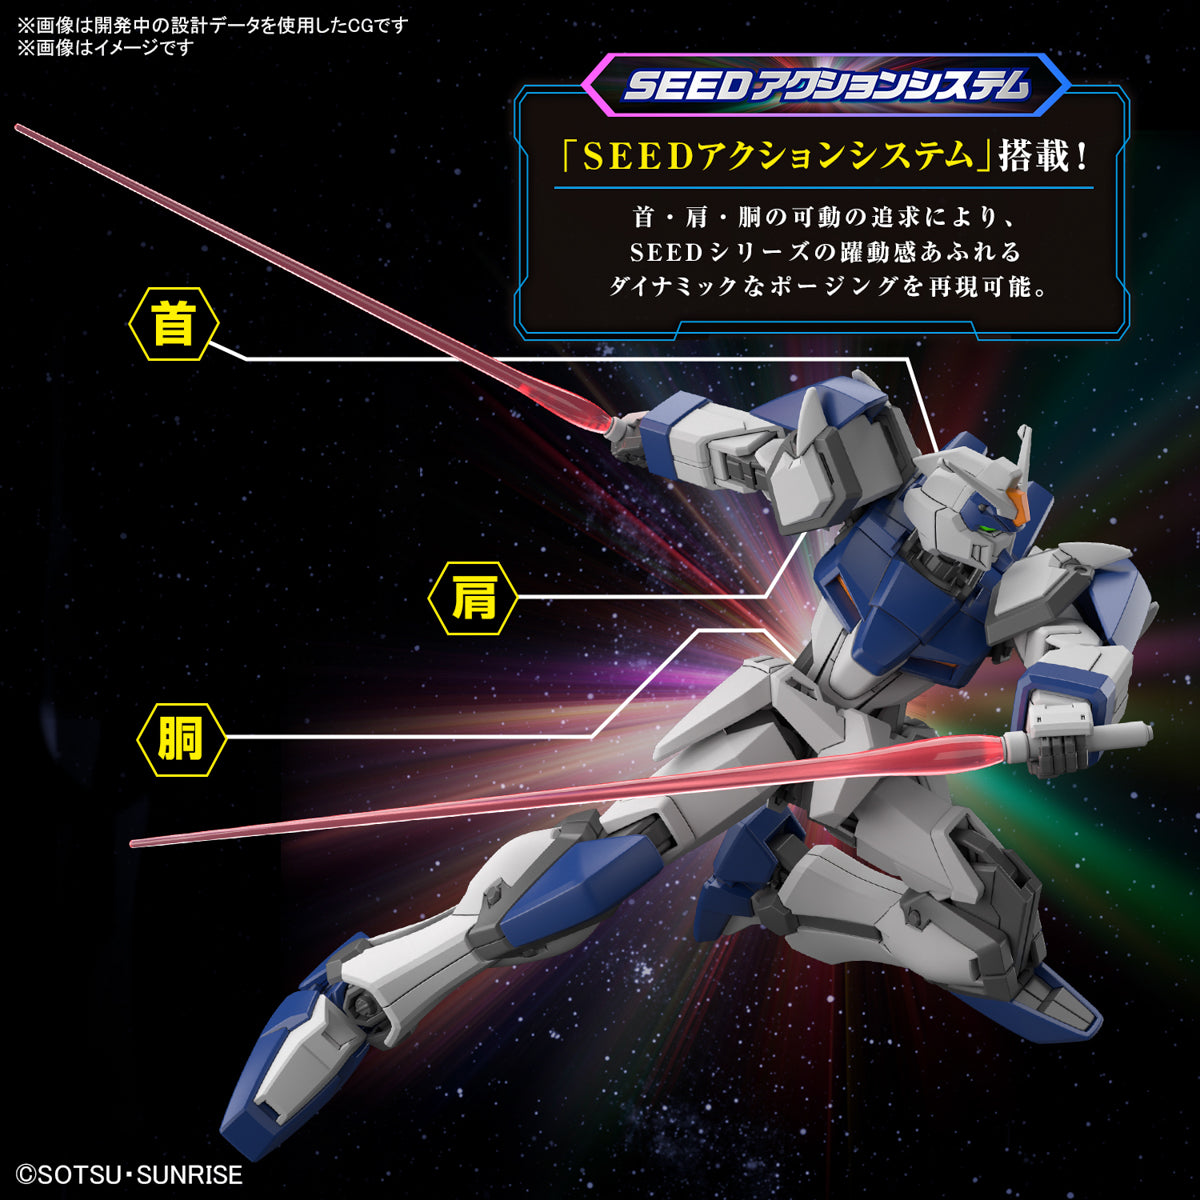 HG Duel Blitz Gundam